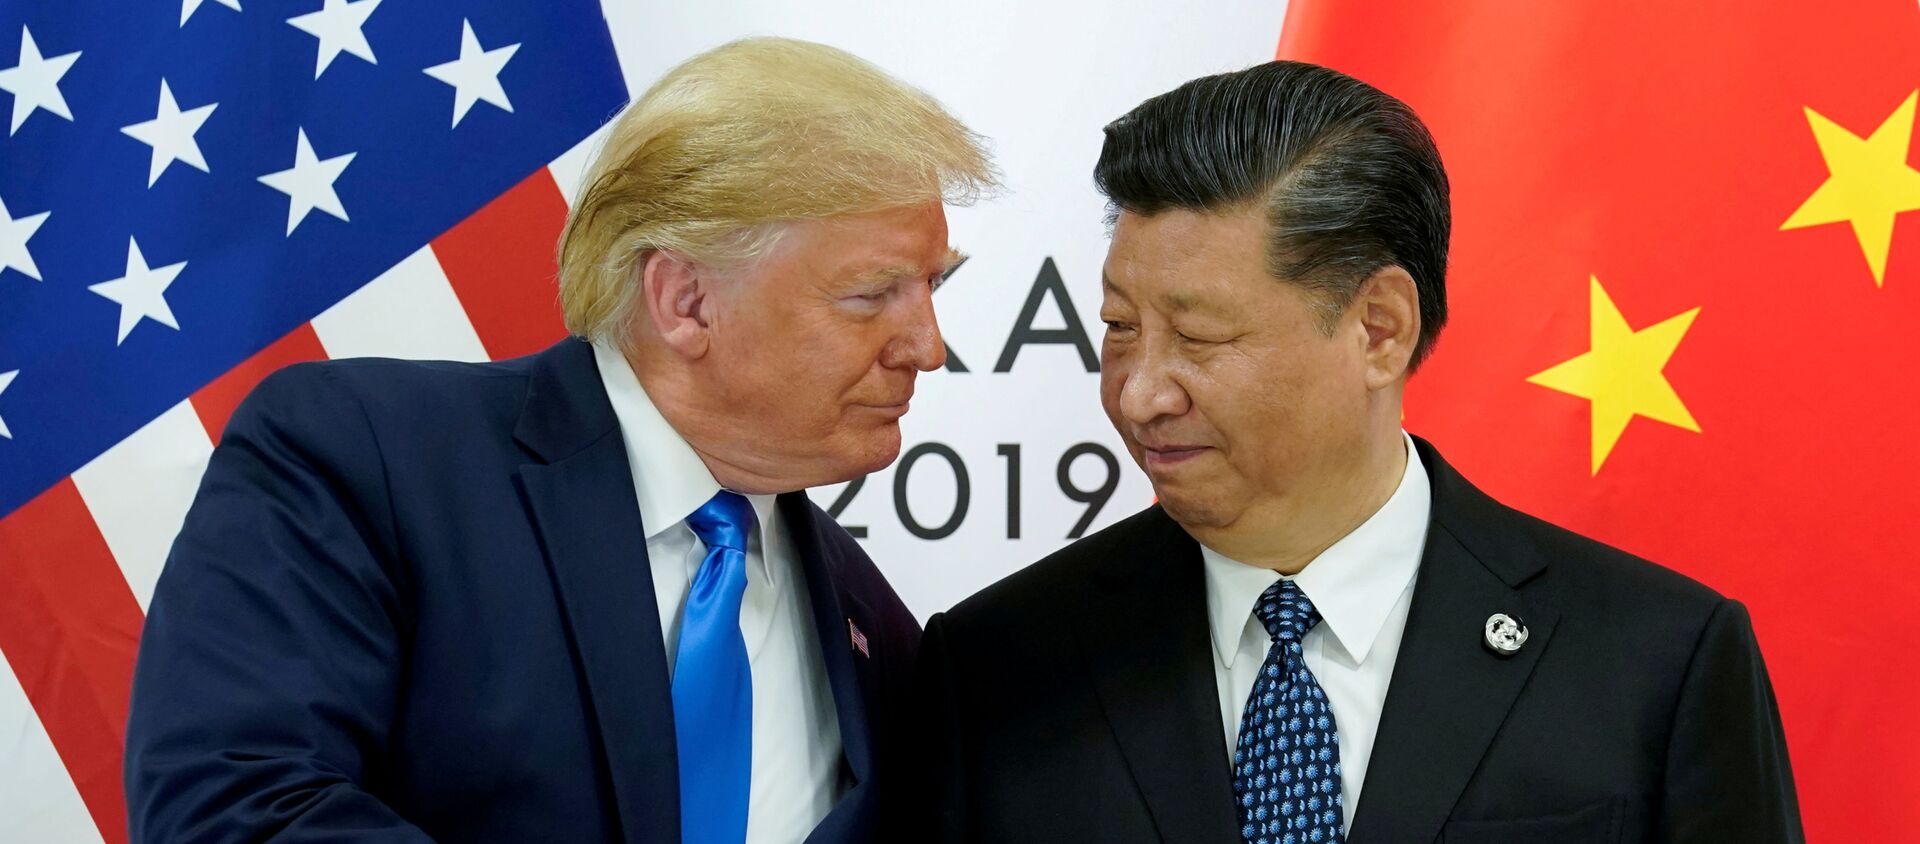 Donald Trump, presidente de EEUU, y Xi Jinping, presidente de China (archivo) - Sputnik Mundo, 1920, 06.11.2019